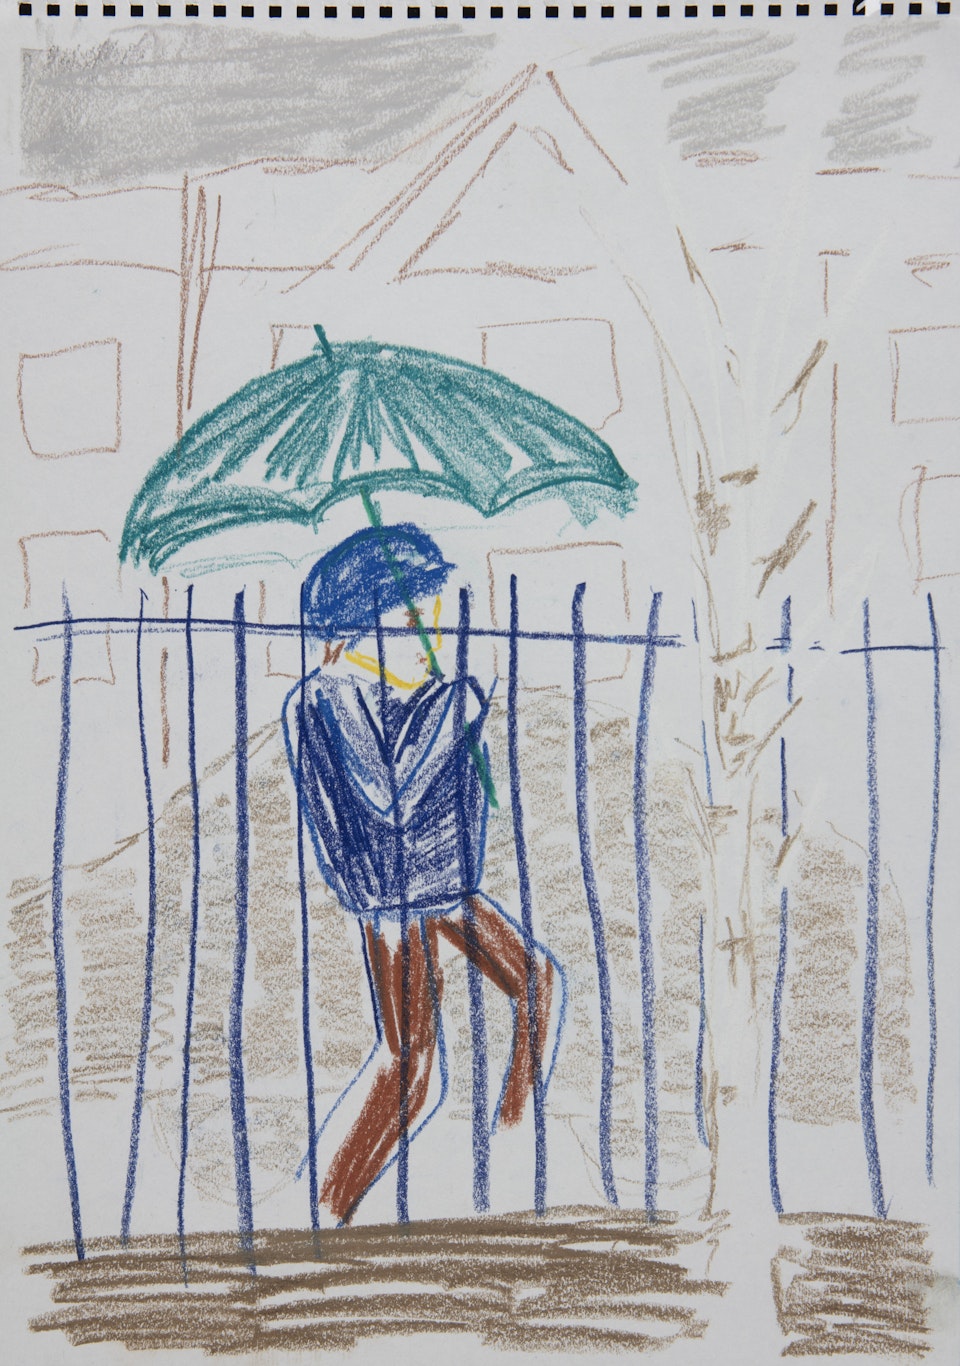 People - Umbrella - 2019 - Pencil on Paper - 21 x 29cm A4